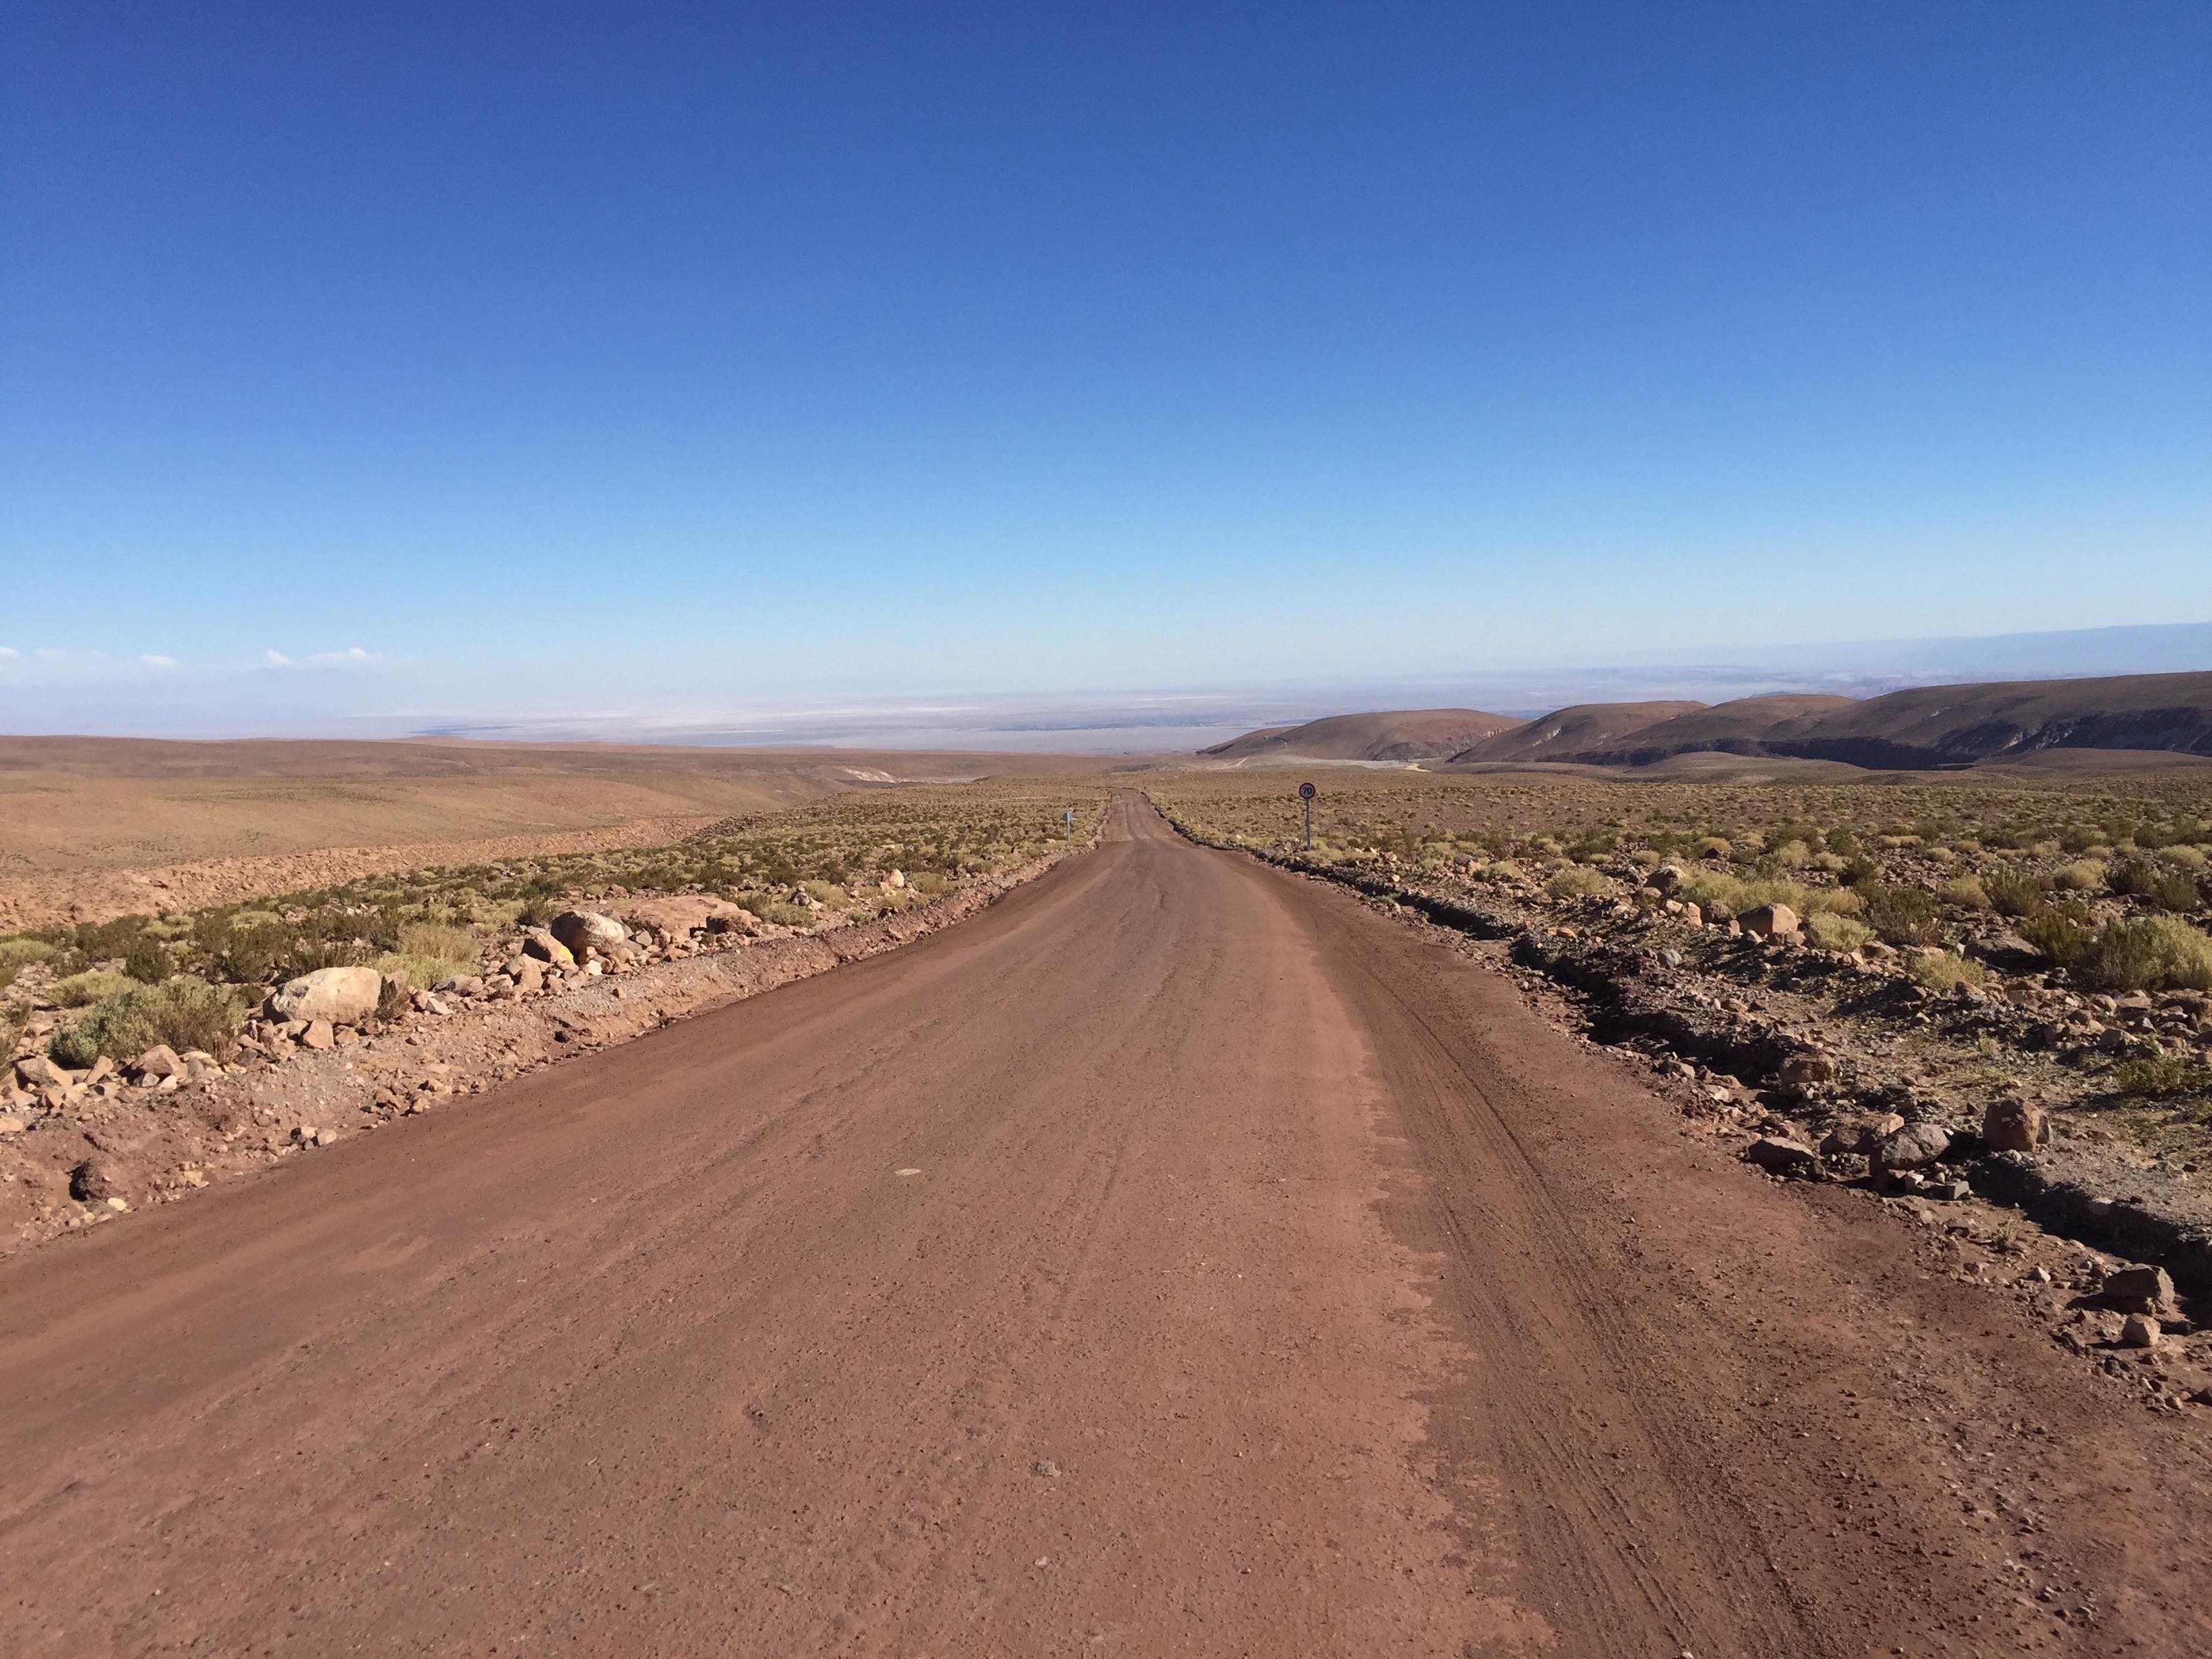 The Atacama Desert in Chile is the driest desert on earth. 